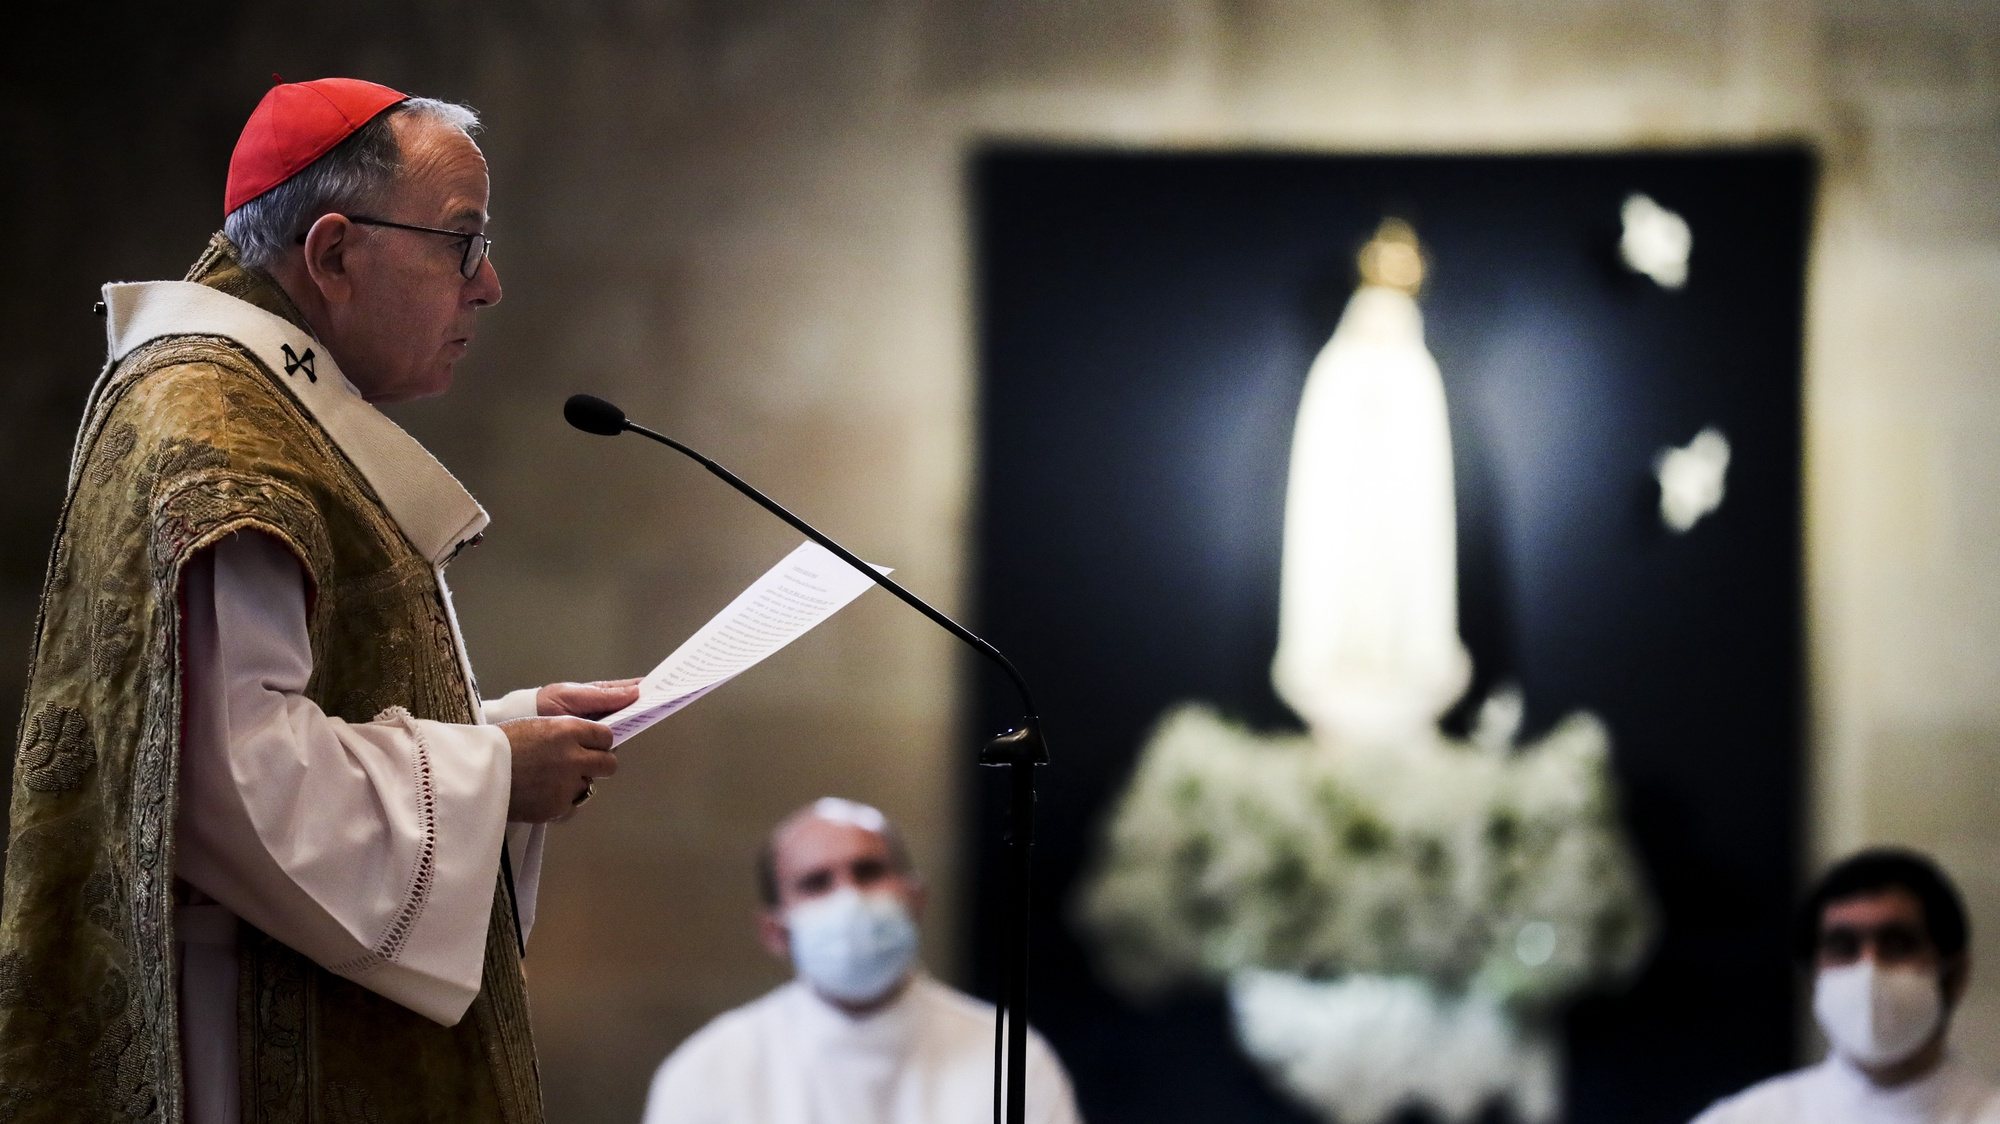 O Cardeal patriarca de Lisboa, Manuel Clemente, presidiu à missa do Dia de Natal na Sé Patriarcal de Lisboa, 25 de dezembro de 2020. TIAGO PETINGA/LUSA